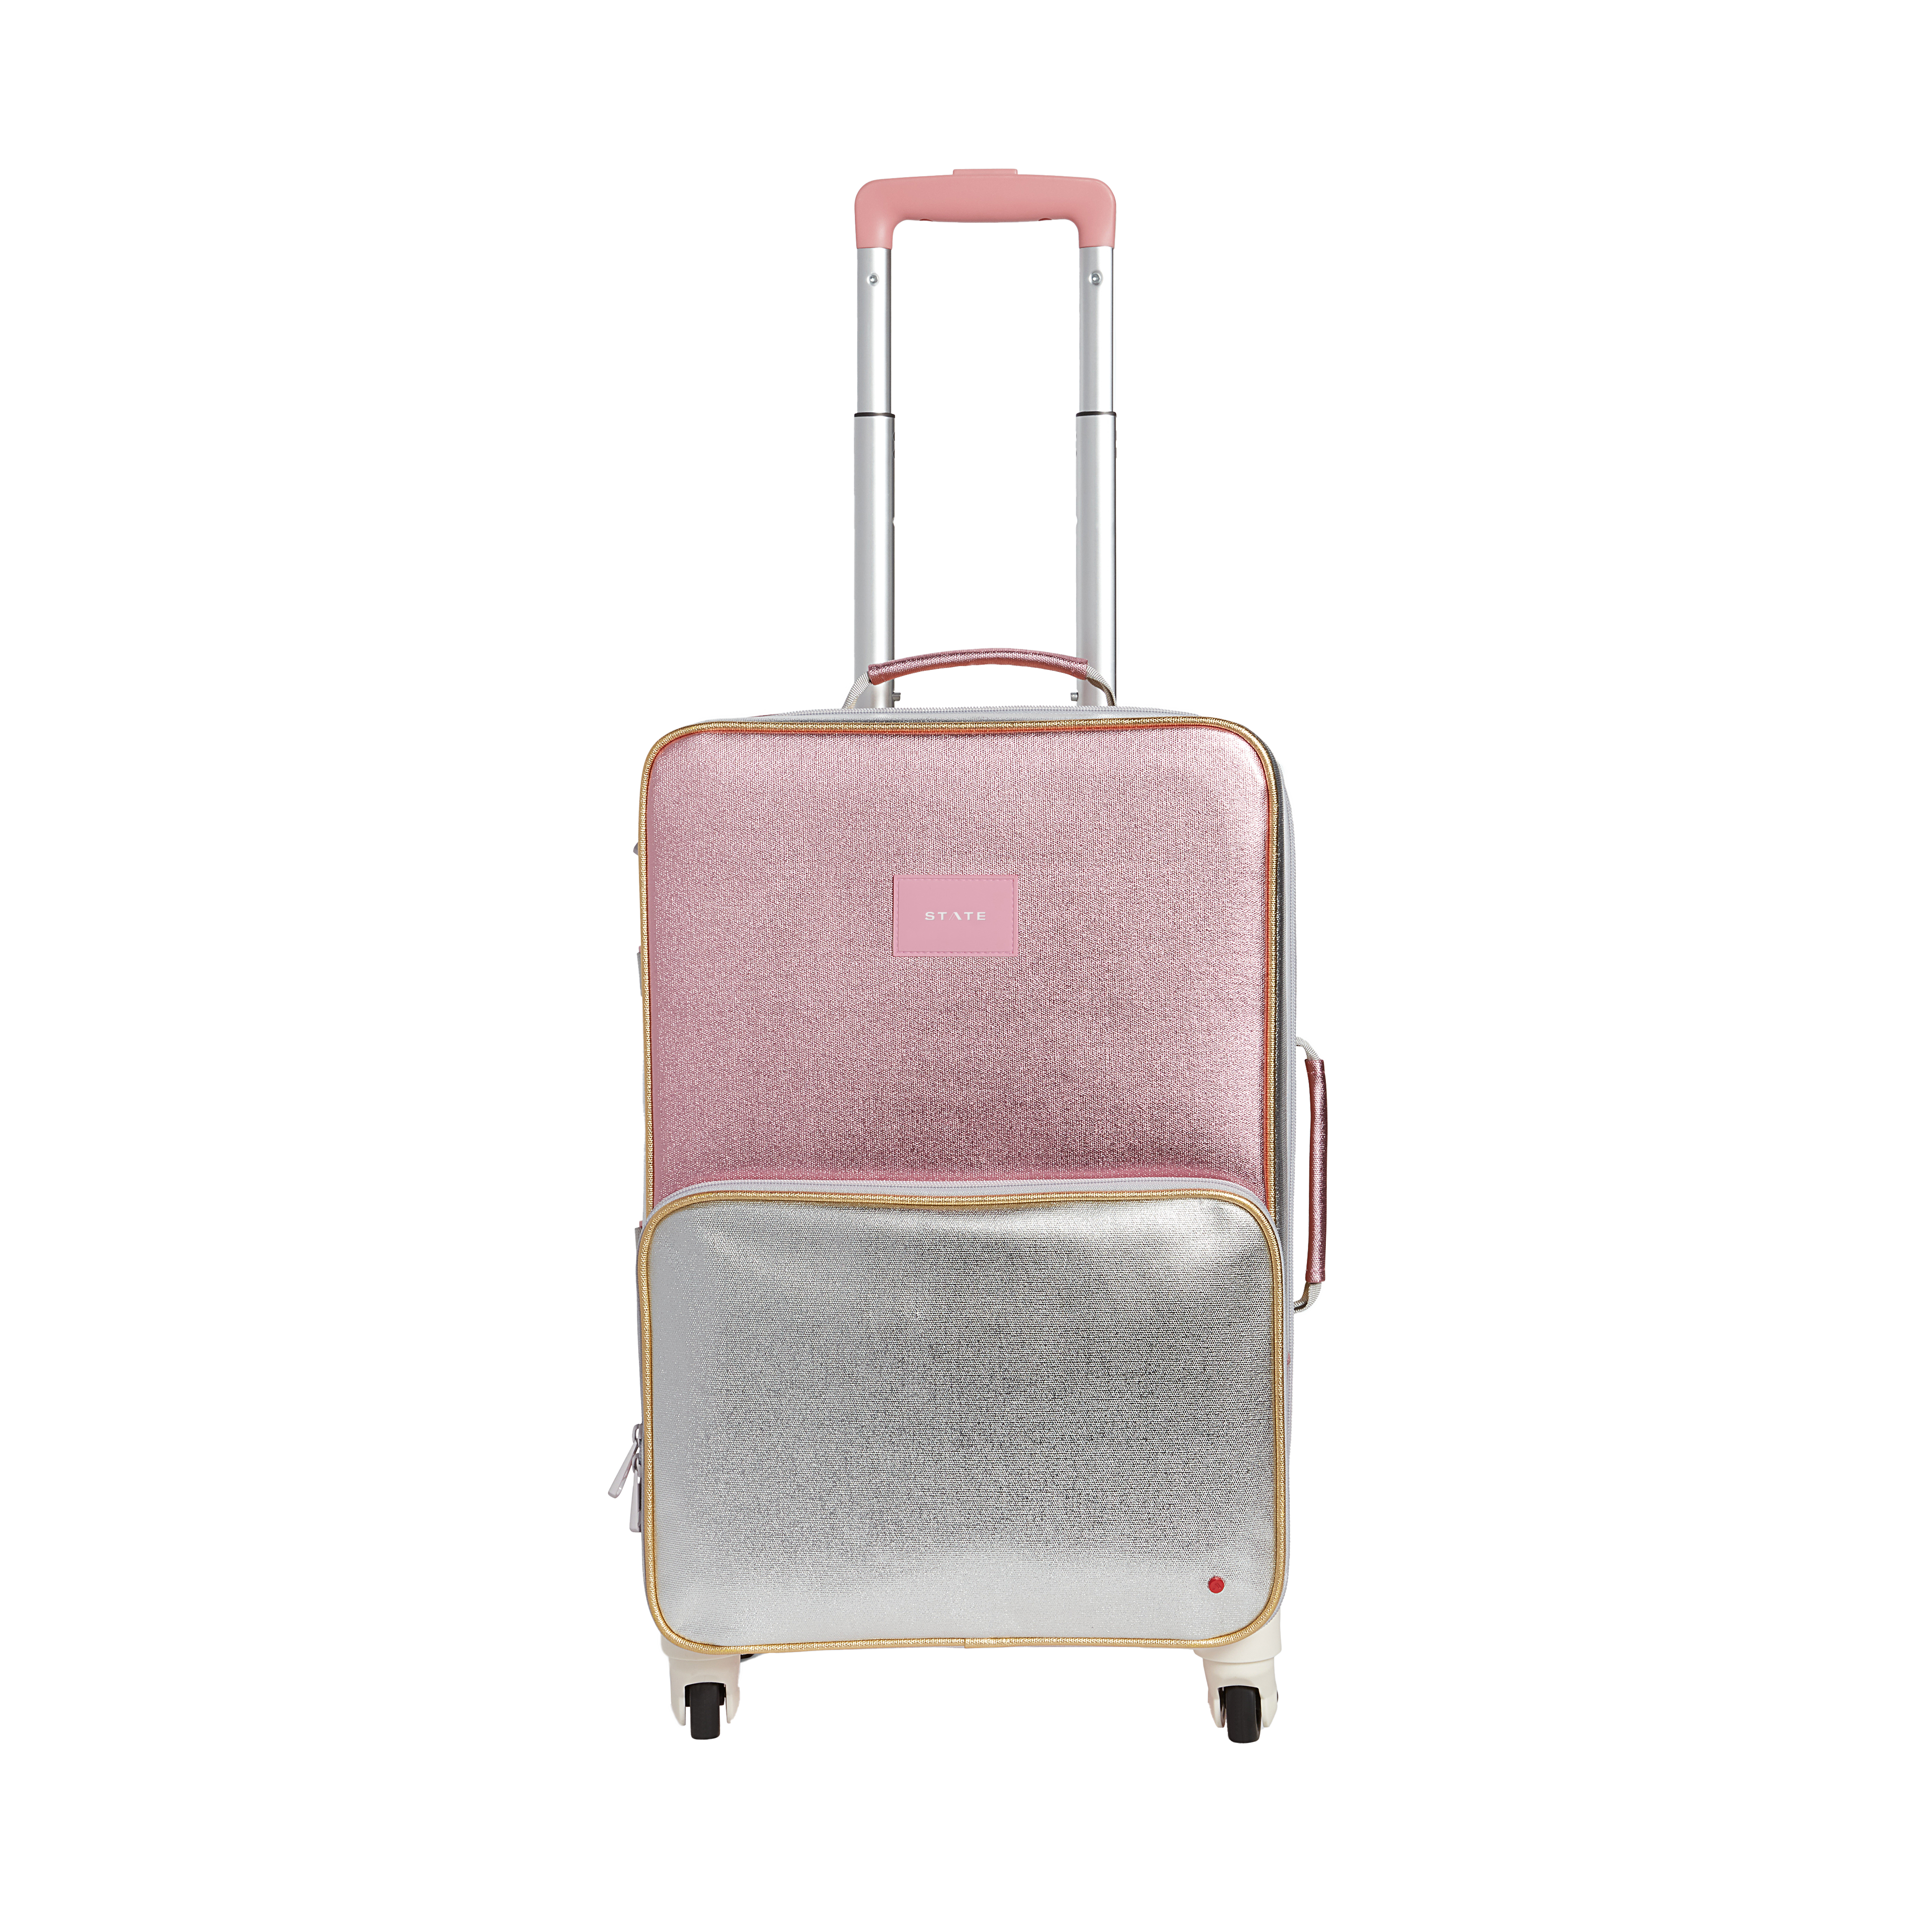 State Bags Mini Logan Suitcase - Rainbow